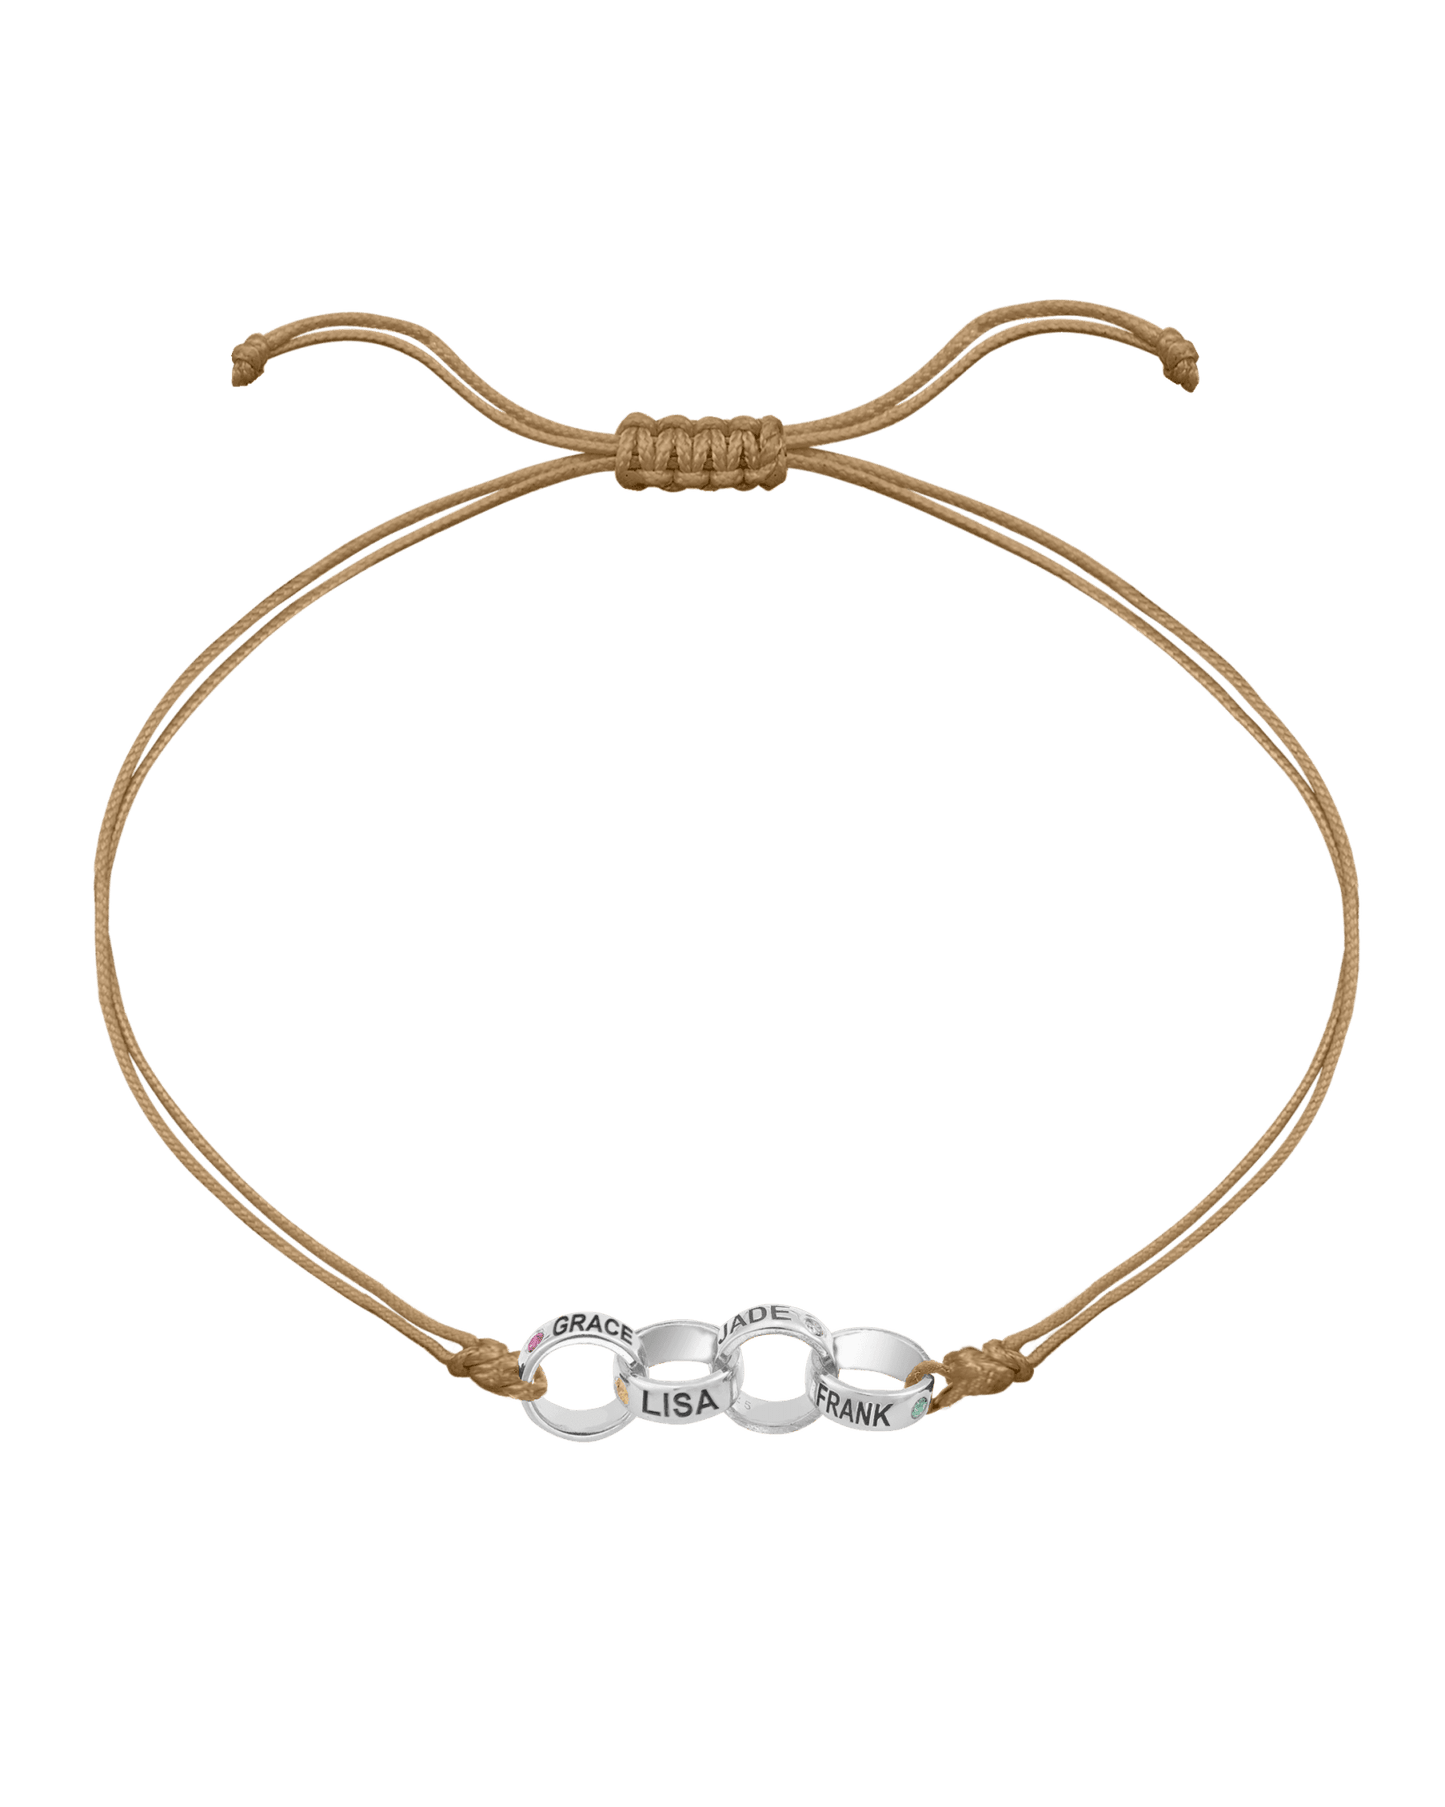 Engravable Links of Love - 14K White Gold Bracelets magal-dev 4 Camel 